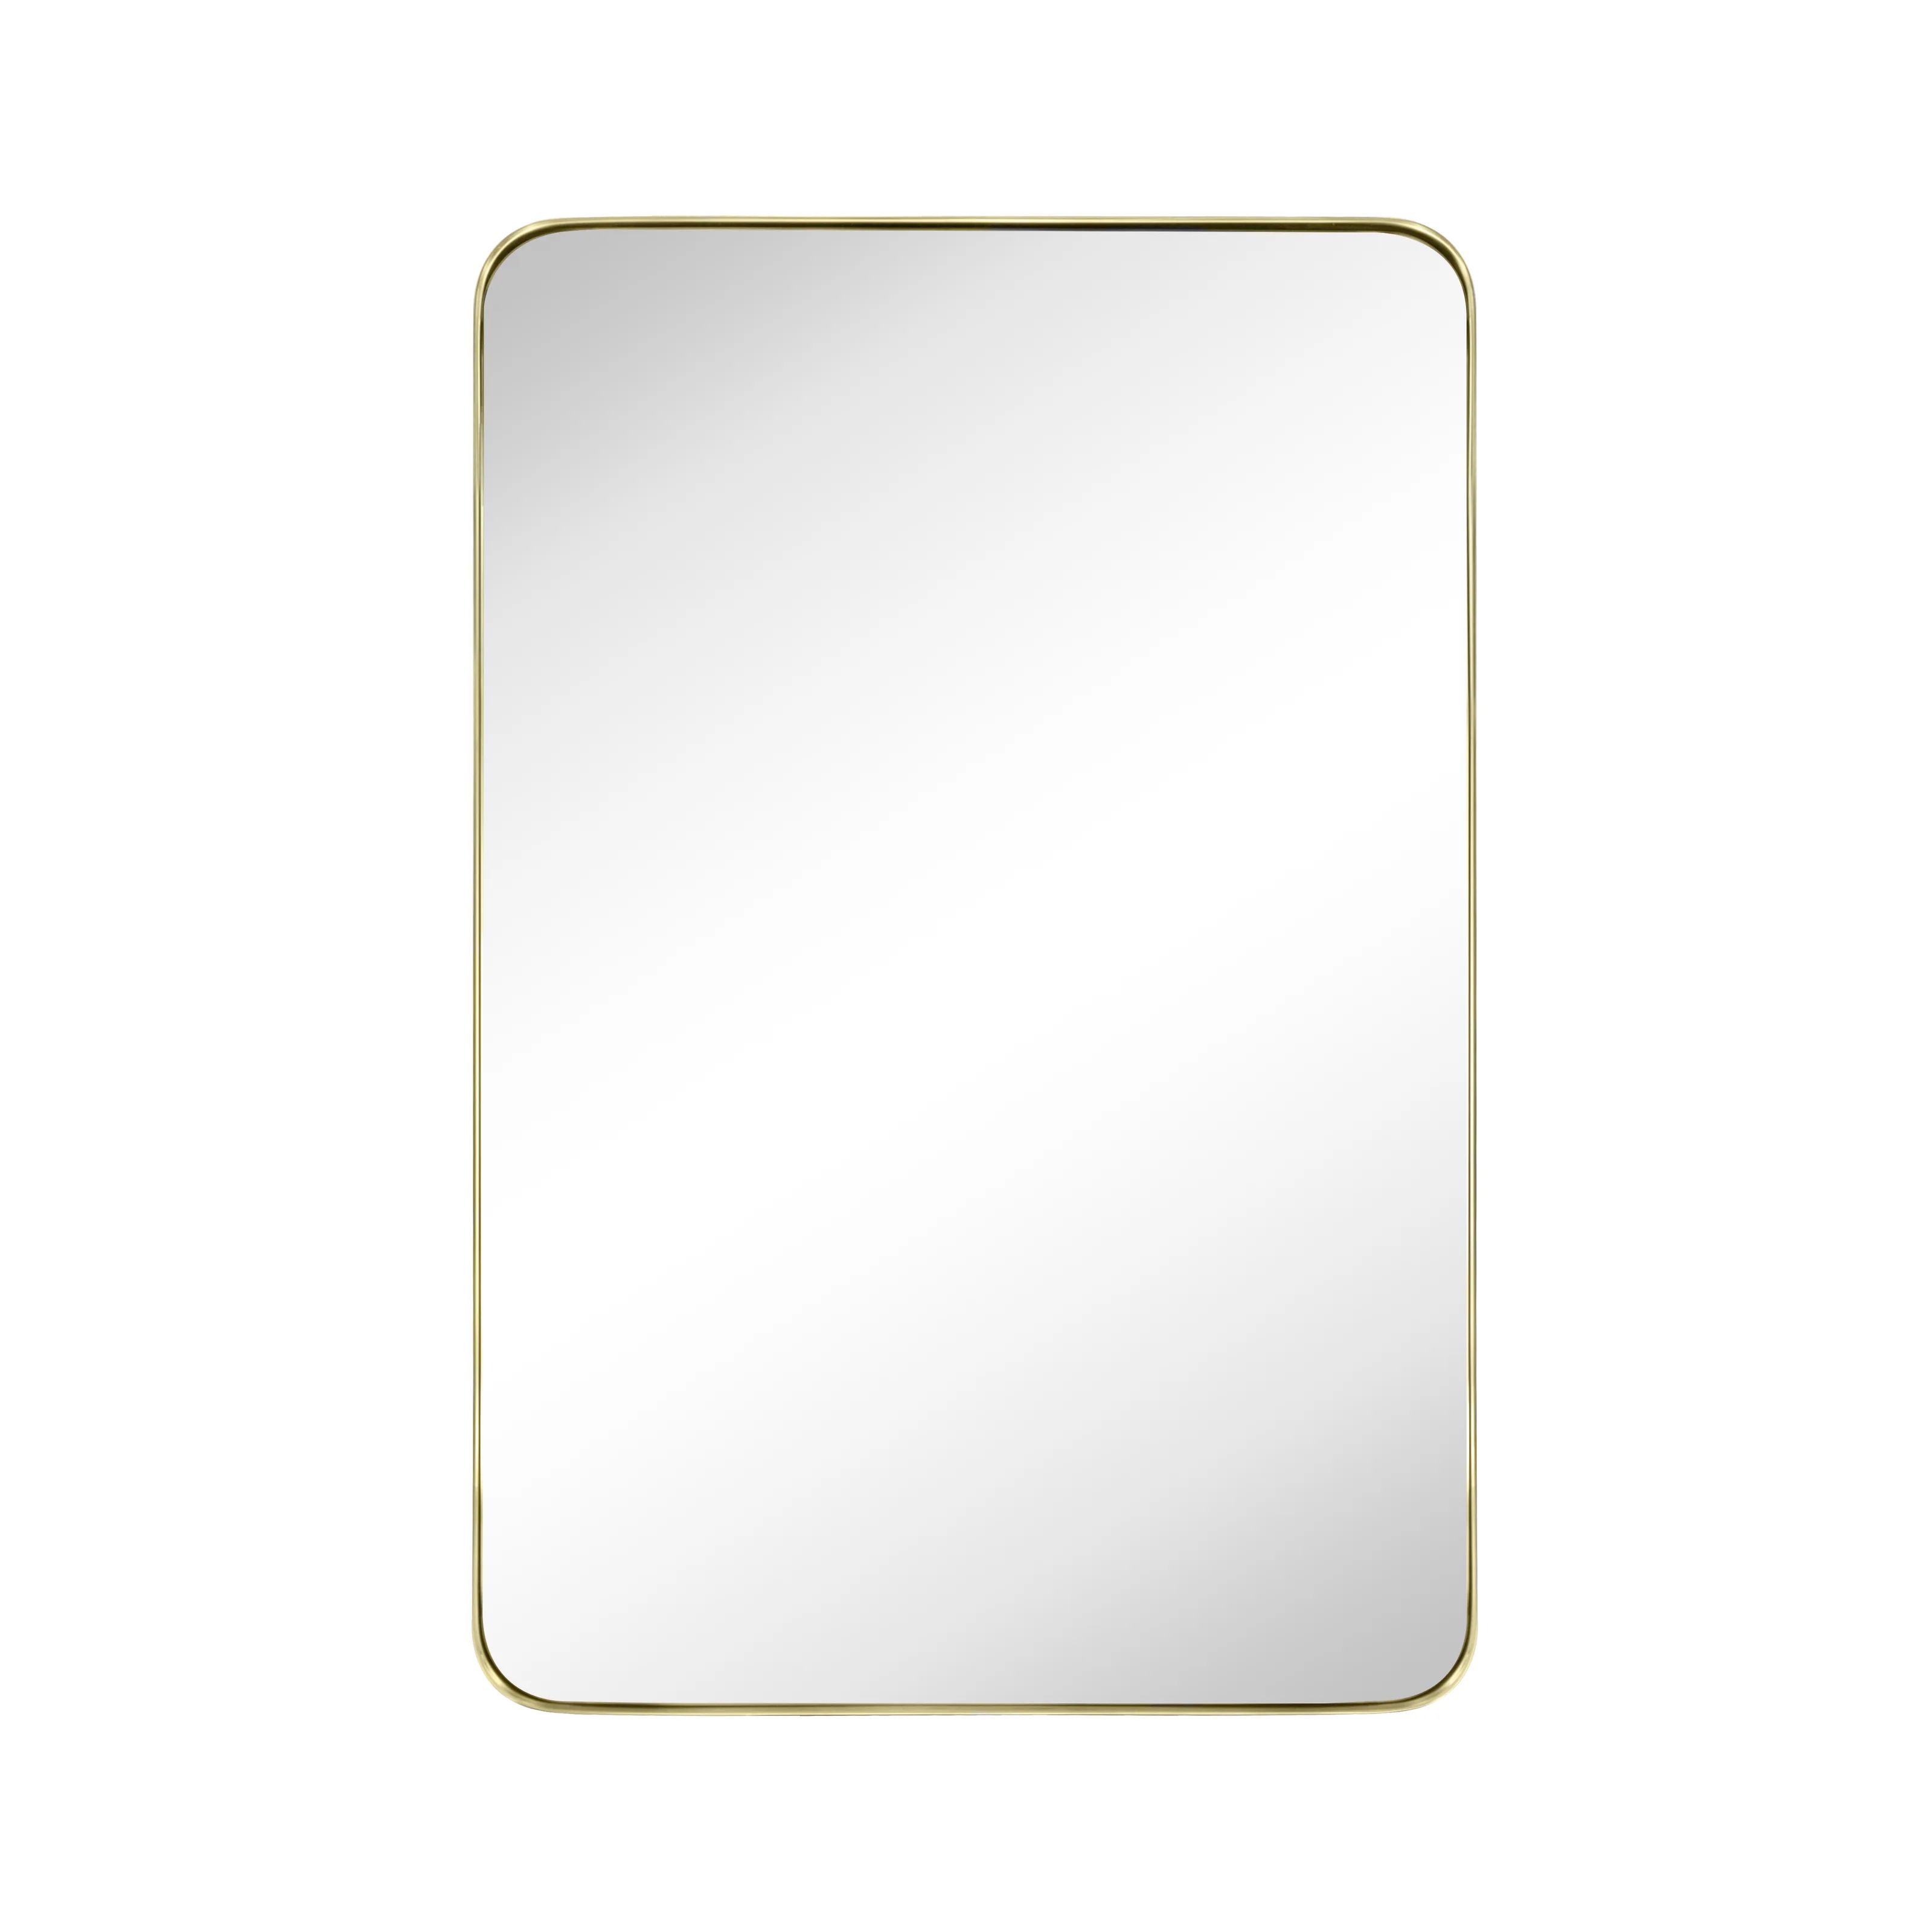 Comtemporary Bathroom / Vanity Mirror | Wayfair Professional